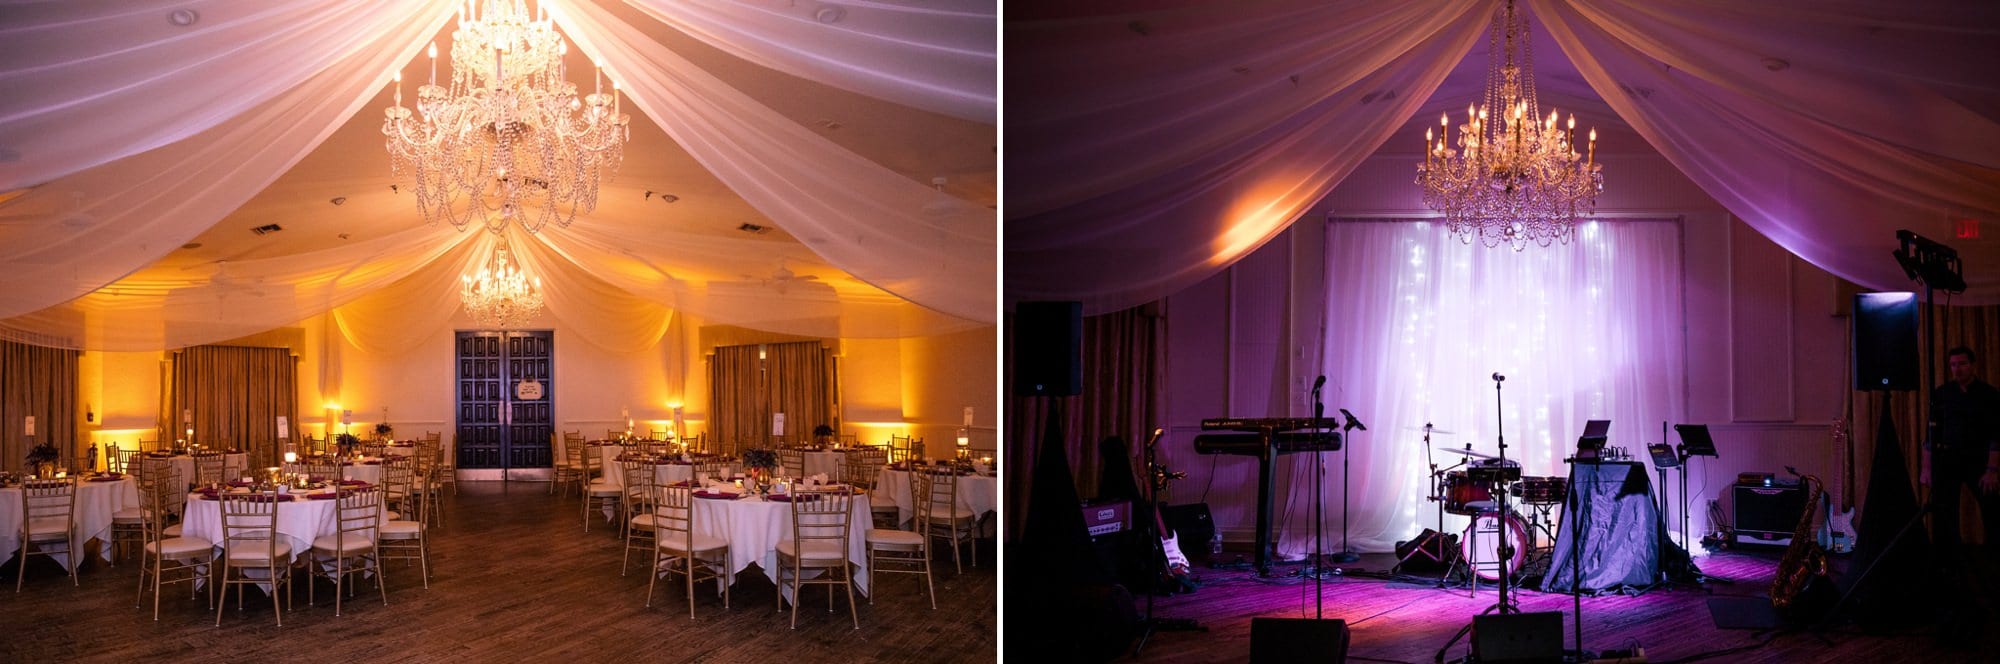 Highland Manor wedding reception setup